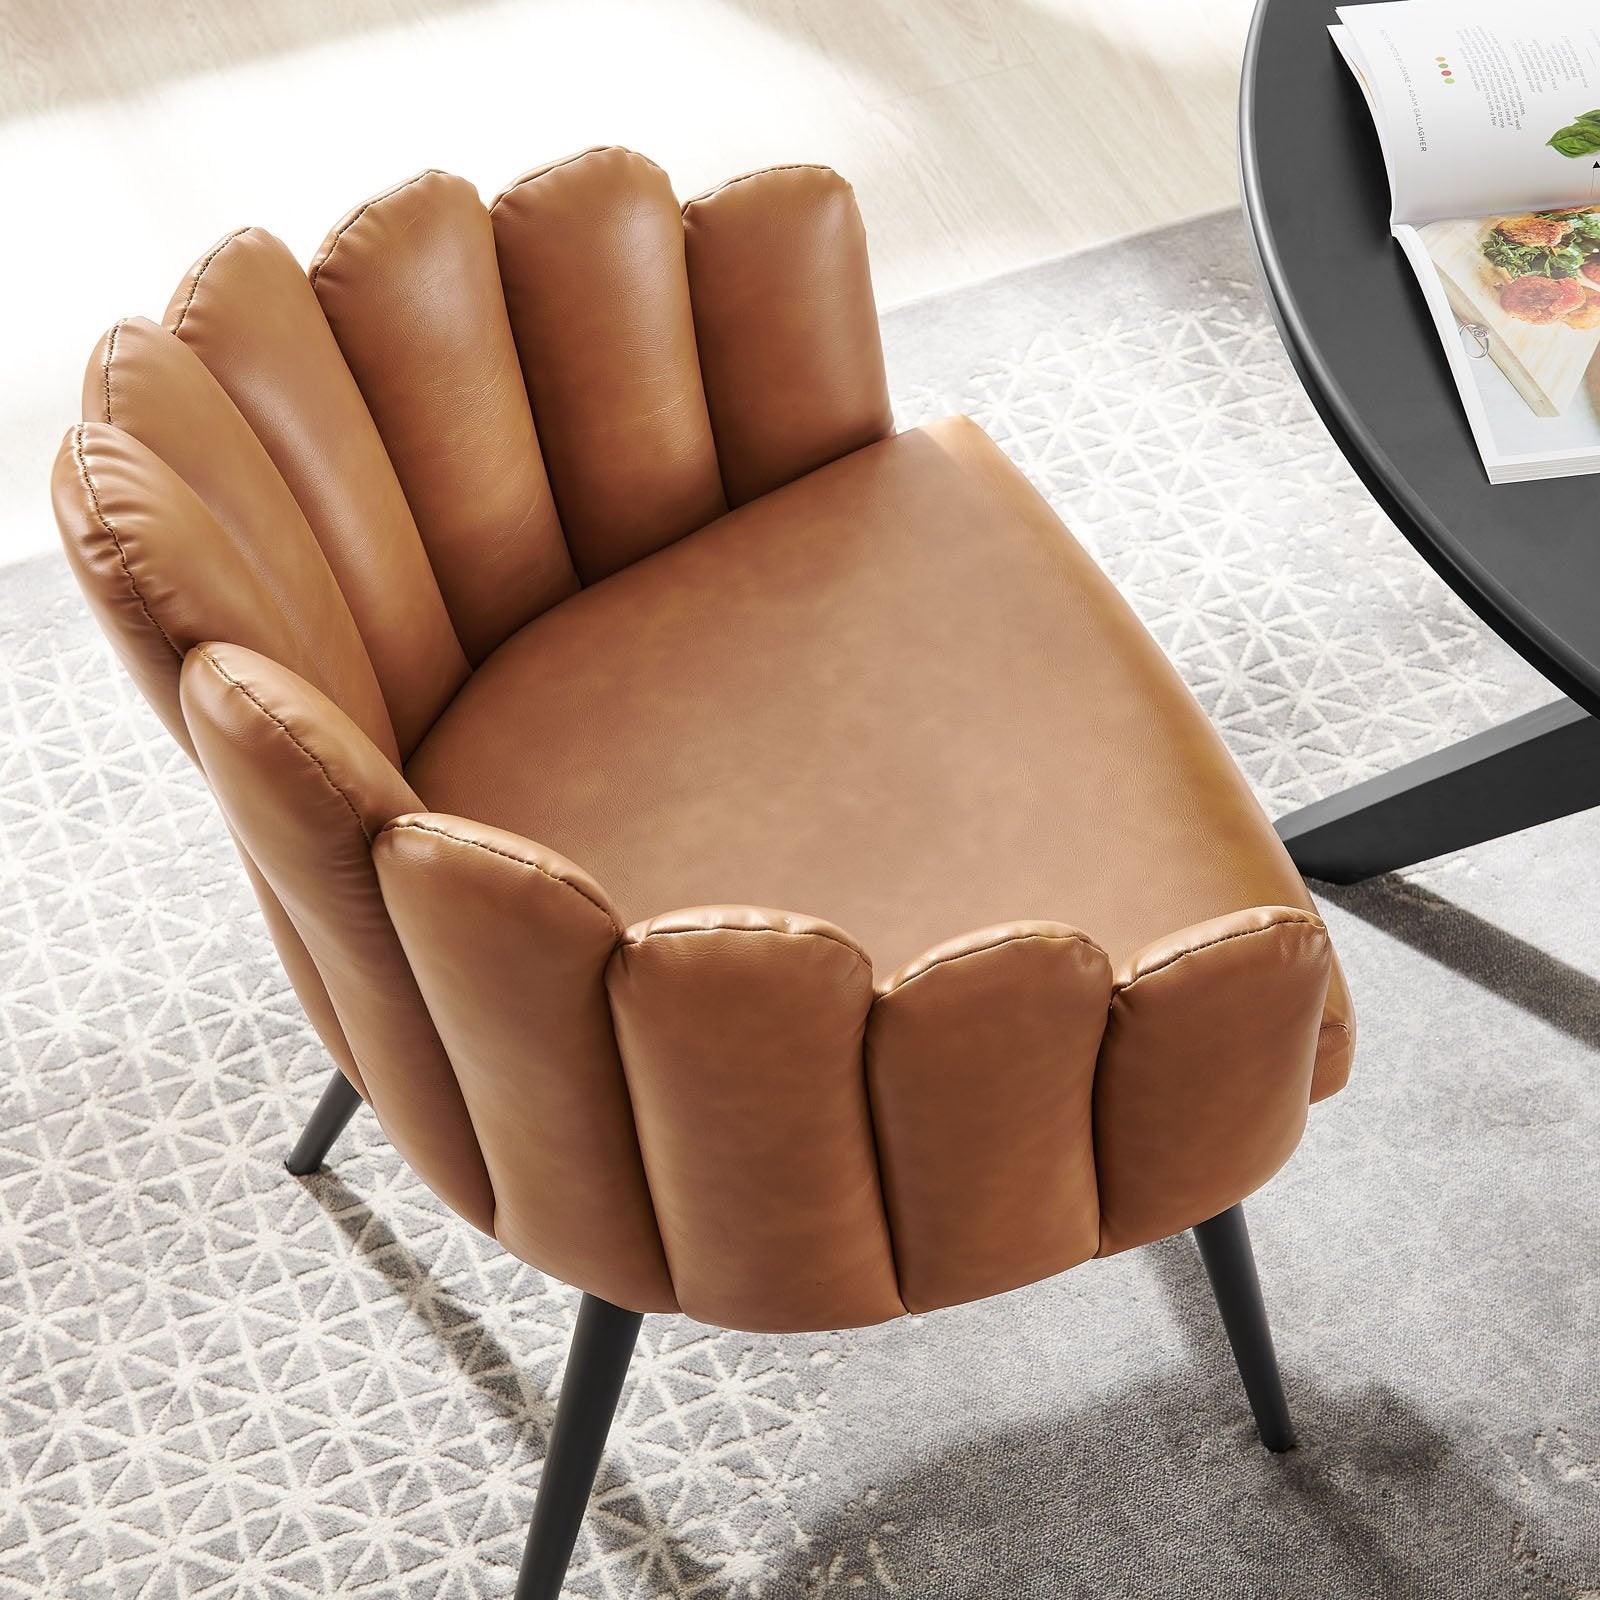 Vanguard Vegan Leather Dining Chair - East Shore Modern Home Furnishings